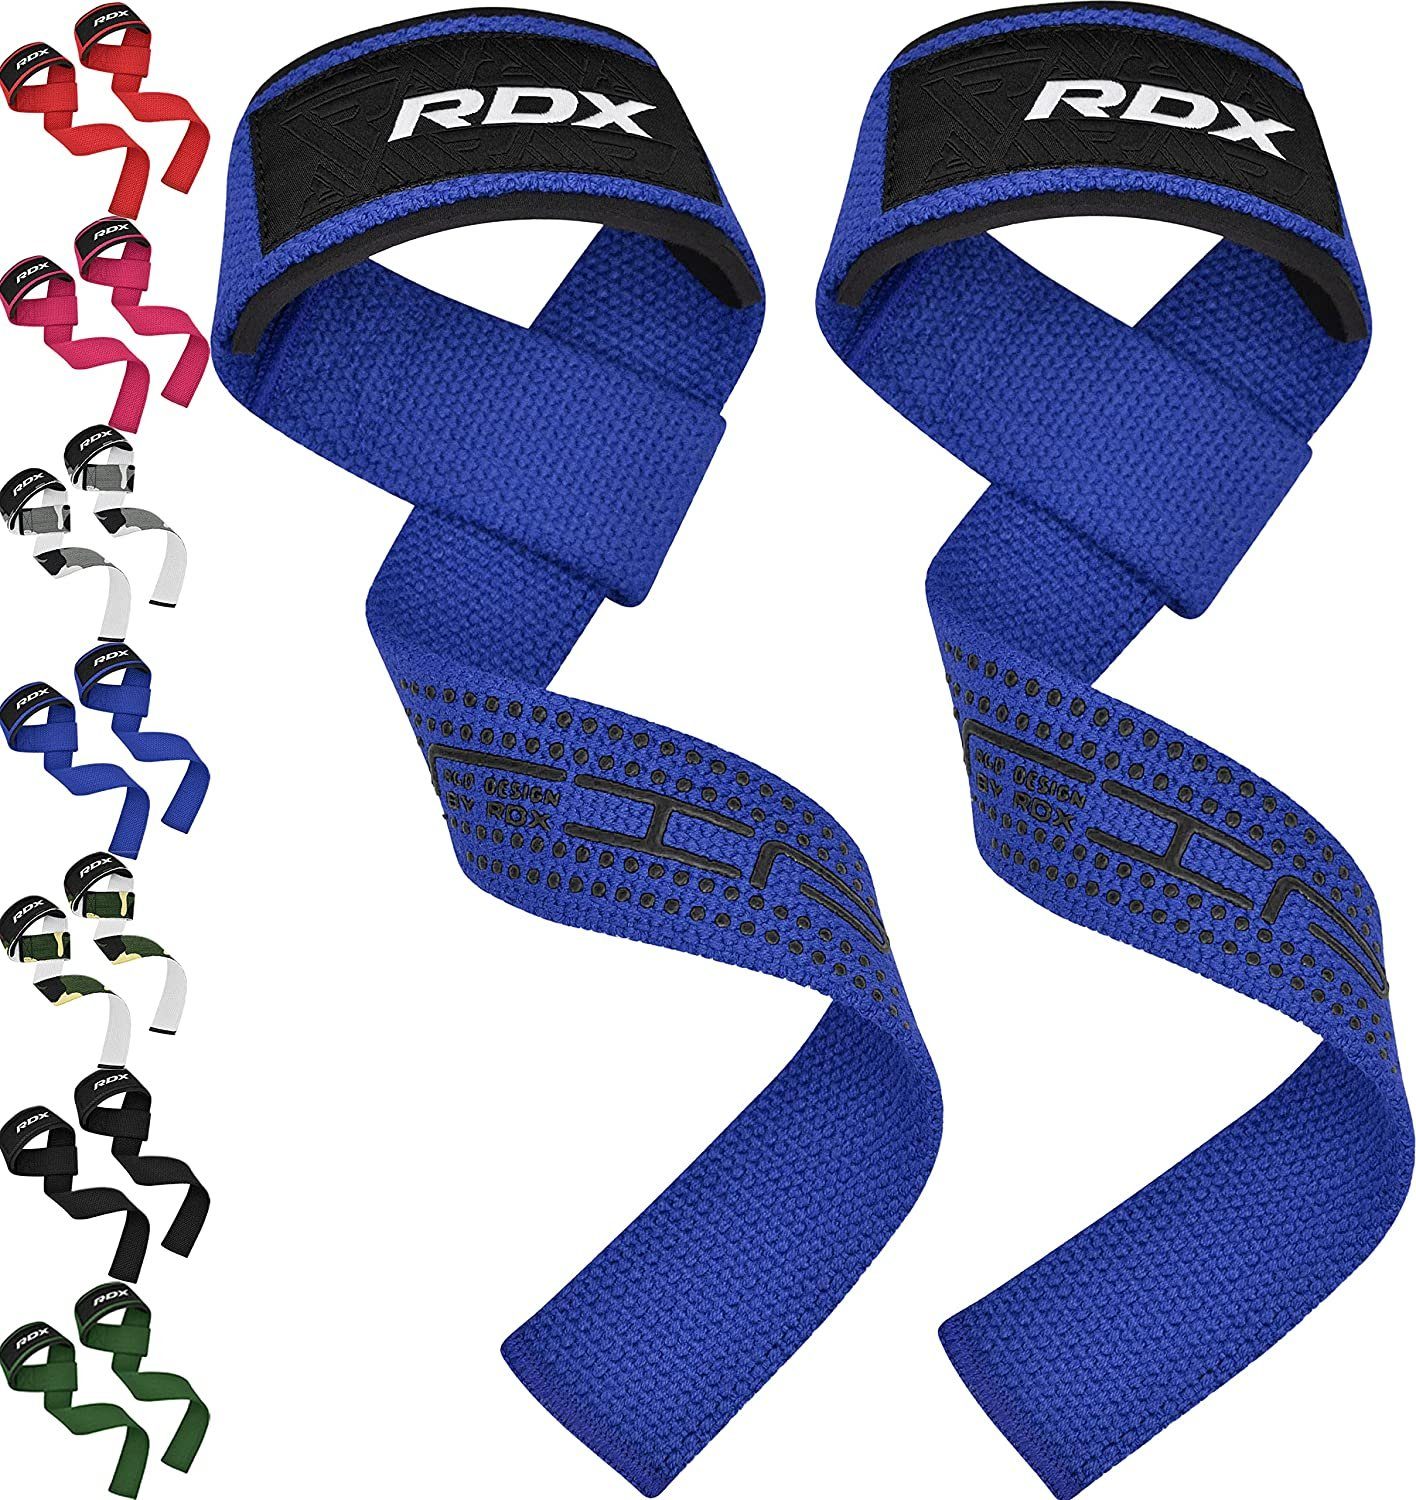 RDX Handgelenkschutz RDX Lifting Straps Strength Training, 60 cm lange professionelle Blue Dotted